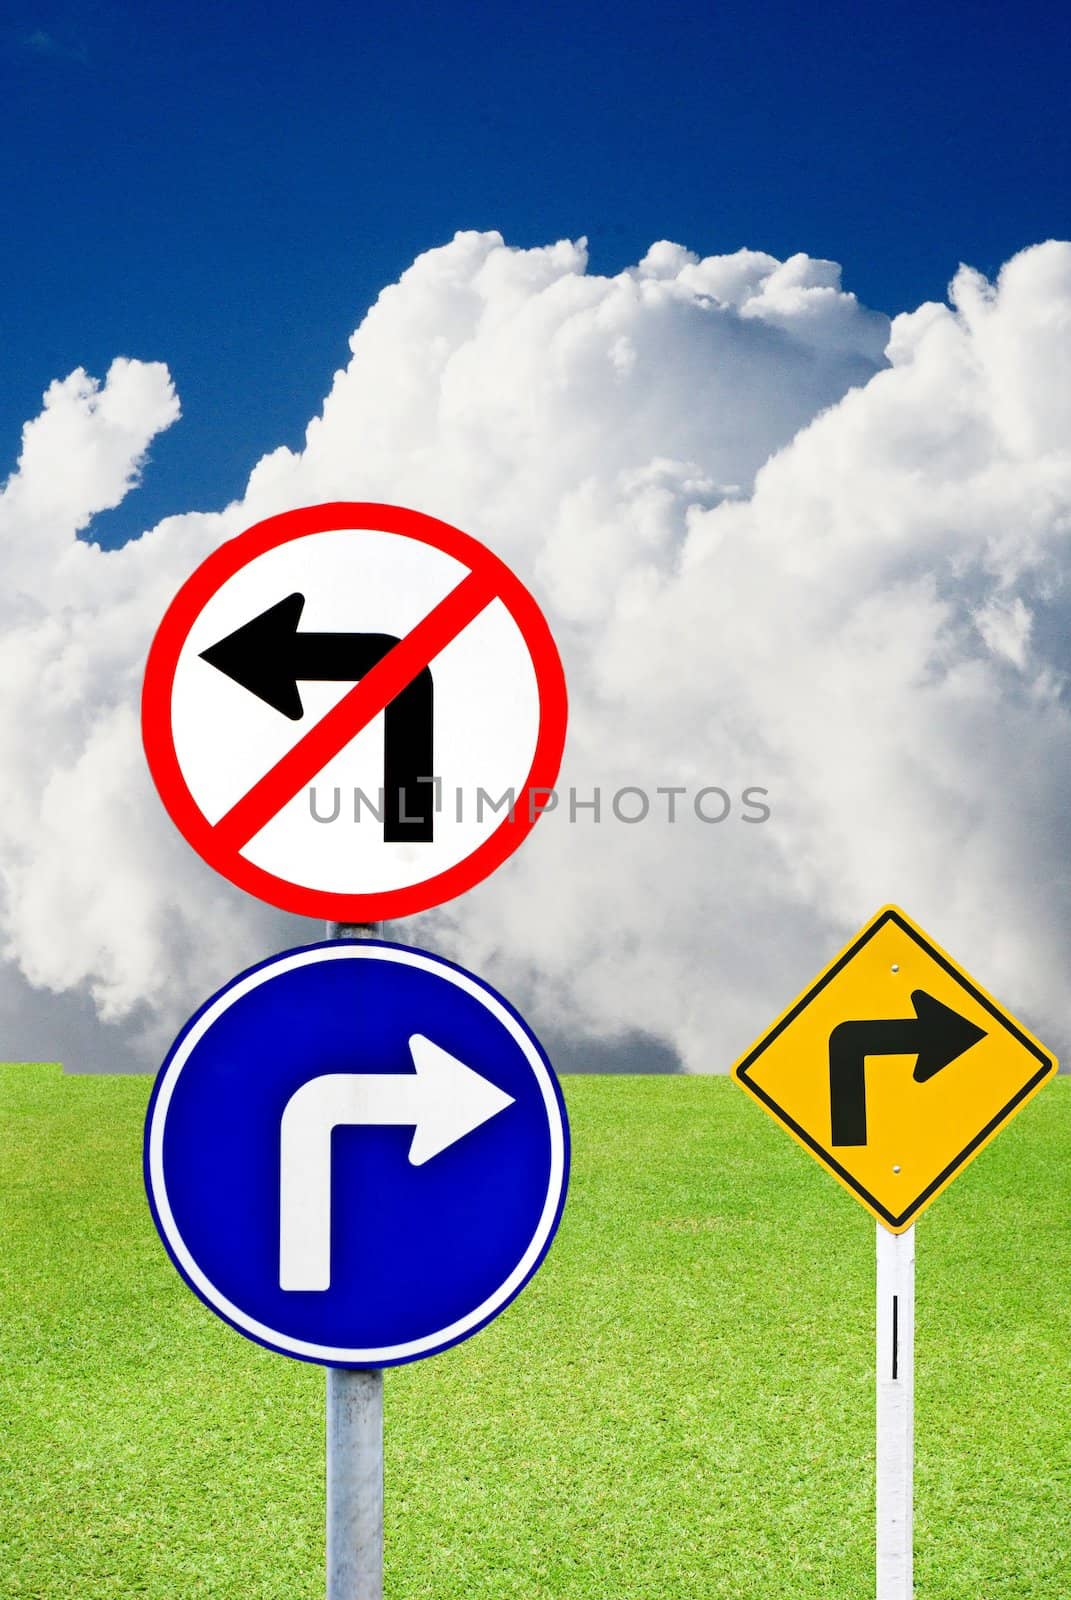 Do not turn left, Please turn right